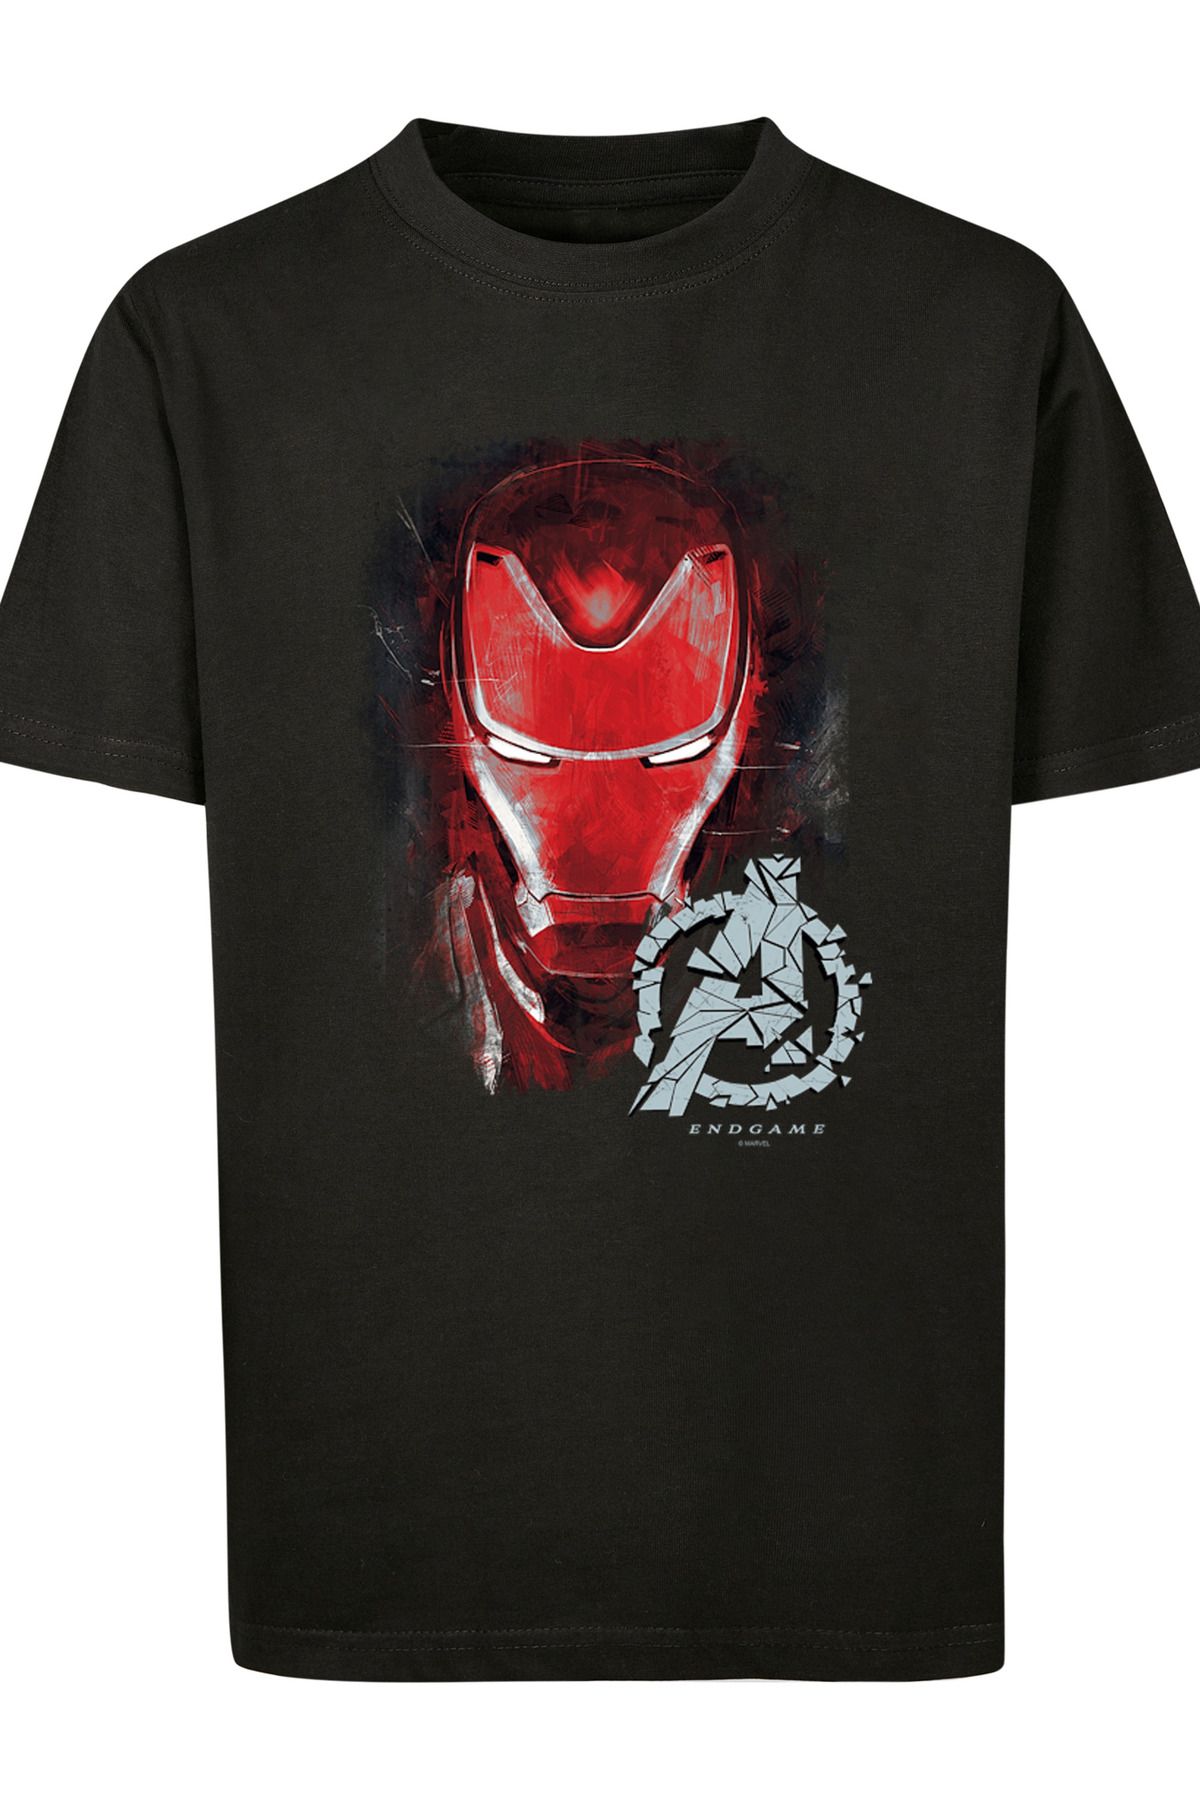 Basic-T- - Iron Marvel Kinder gebürstet Kinder mit Trendyol Shirt F4NT4STIC für Avengers Man Endgame